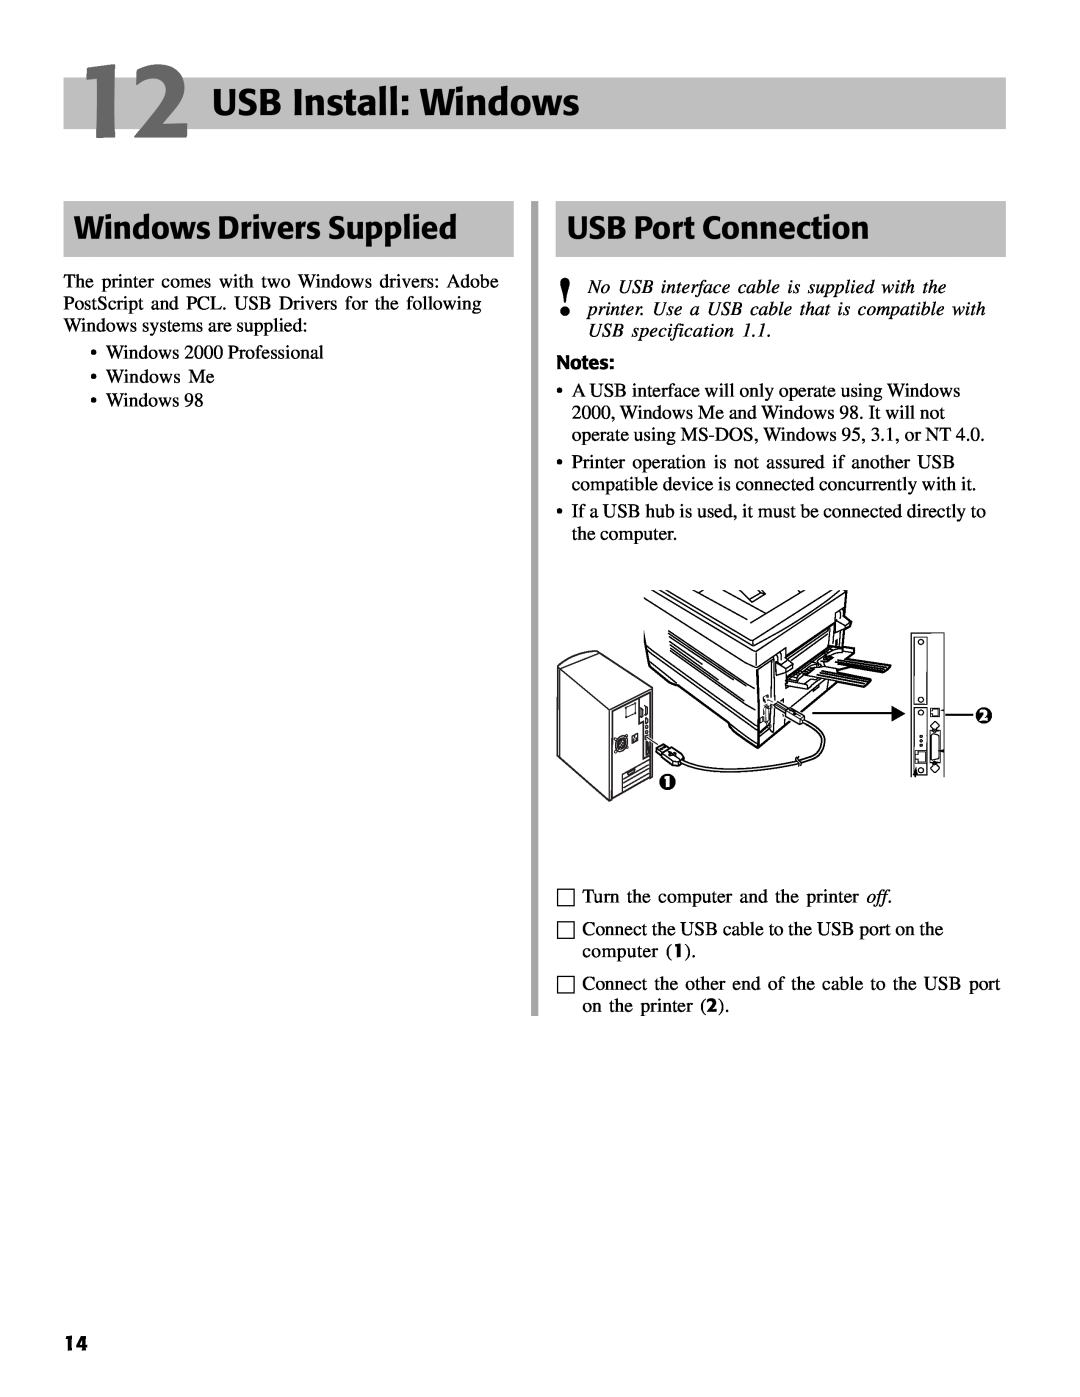 Oki C7000 setup guide USB Install Windows, Windows Drivers Supplied, USB Port Connection 